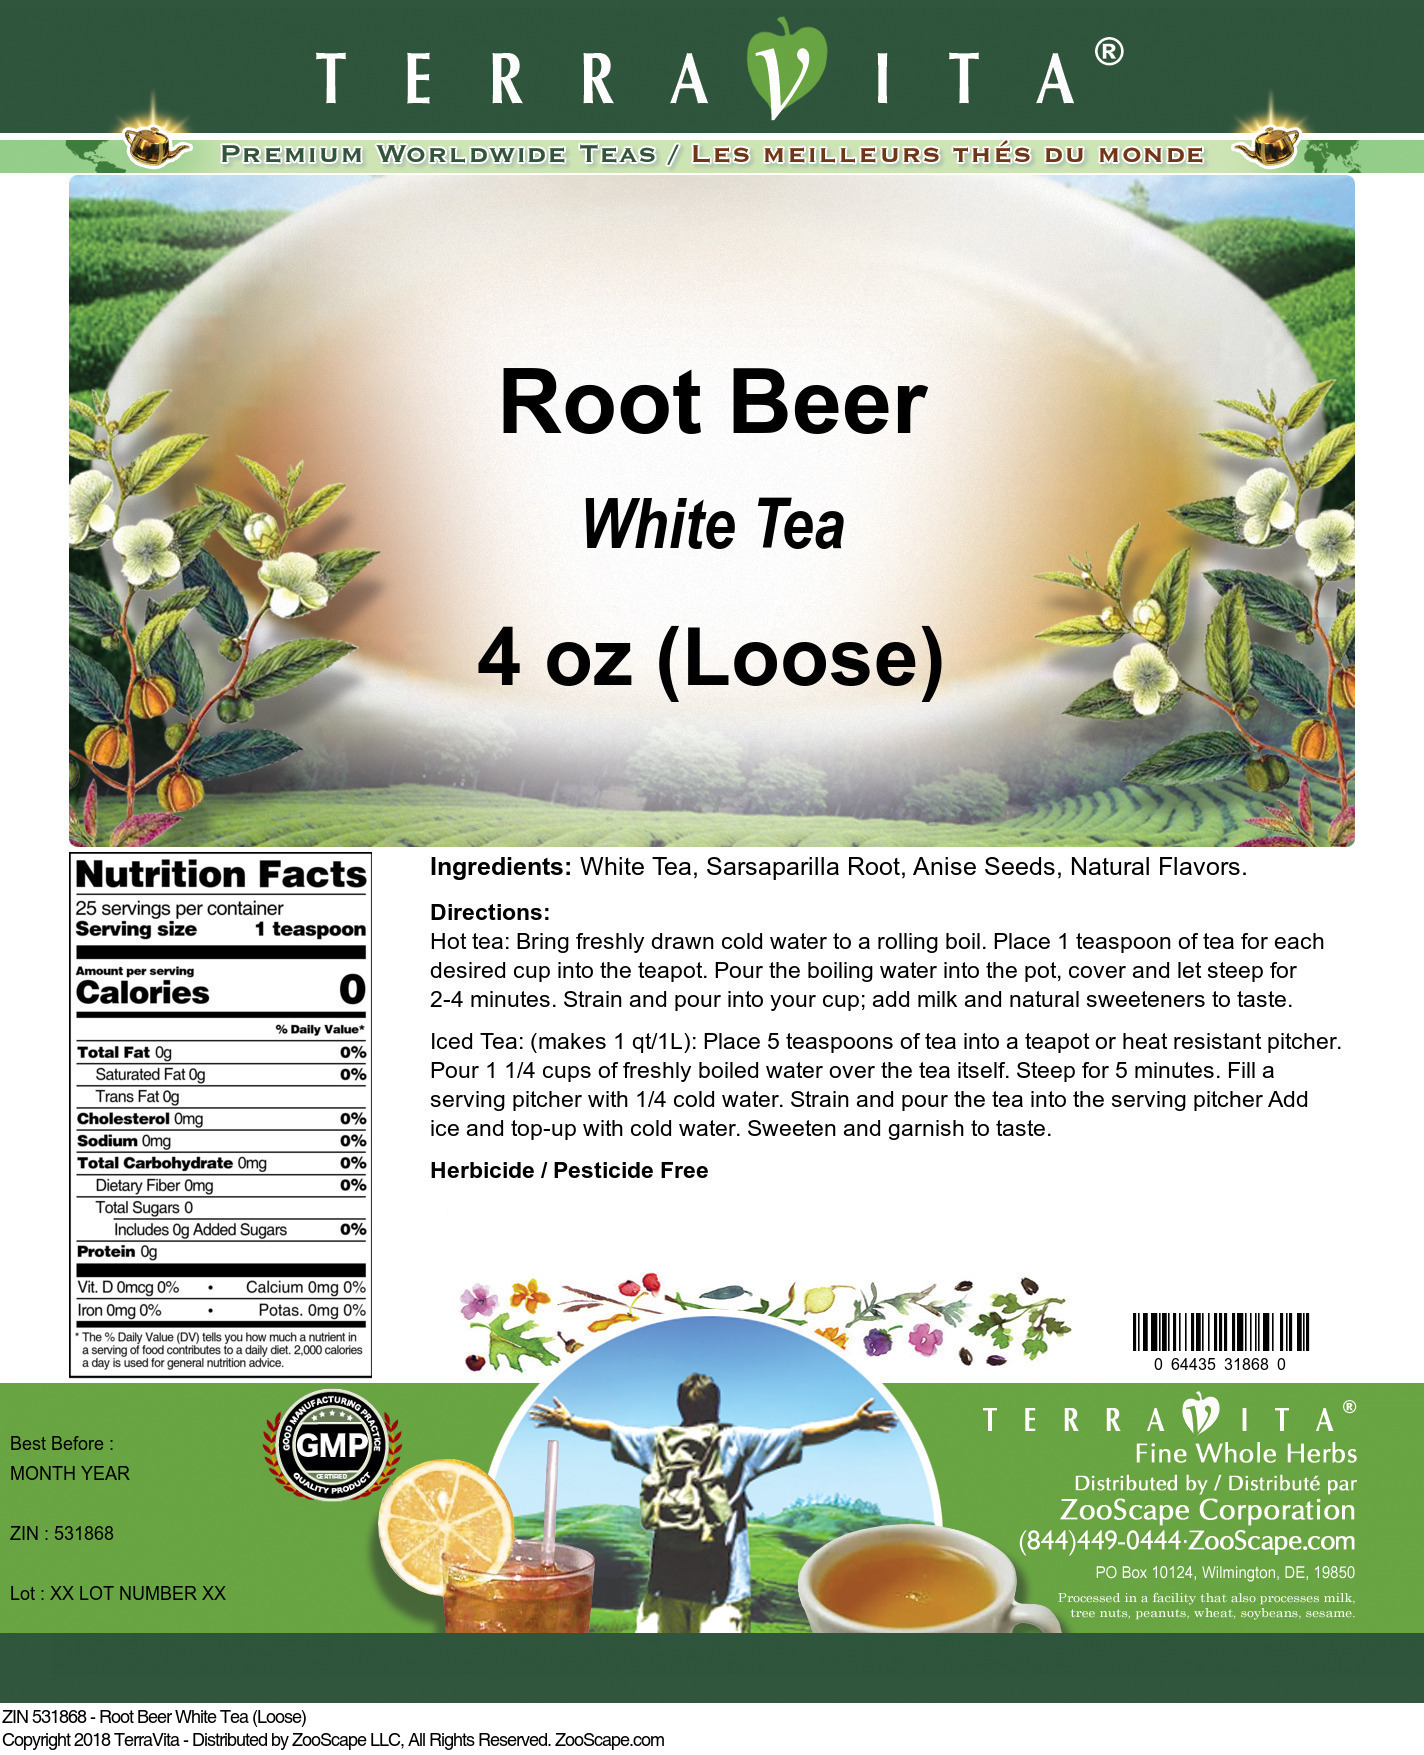 Root Beer White Tea (Loose) - Label